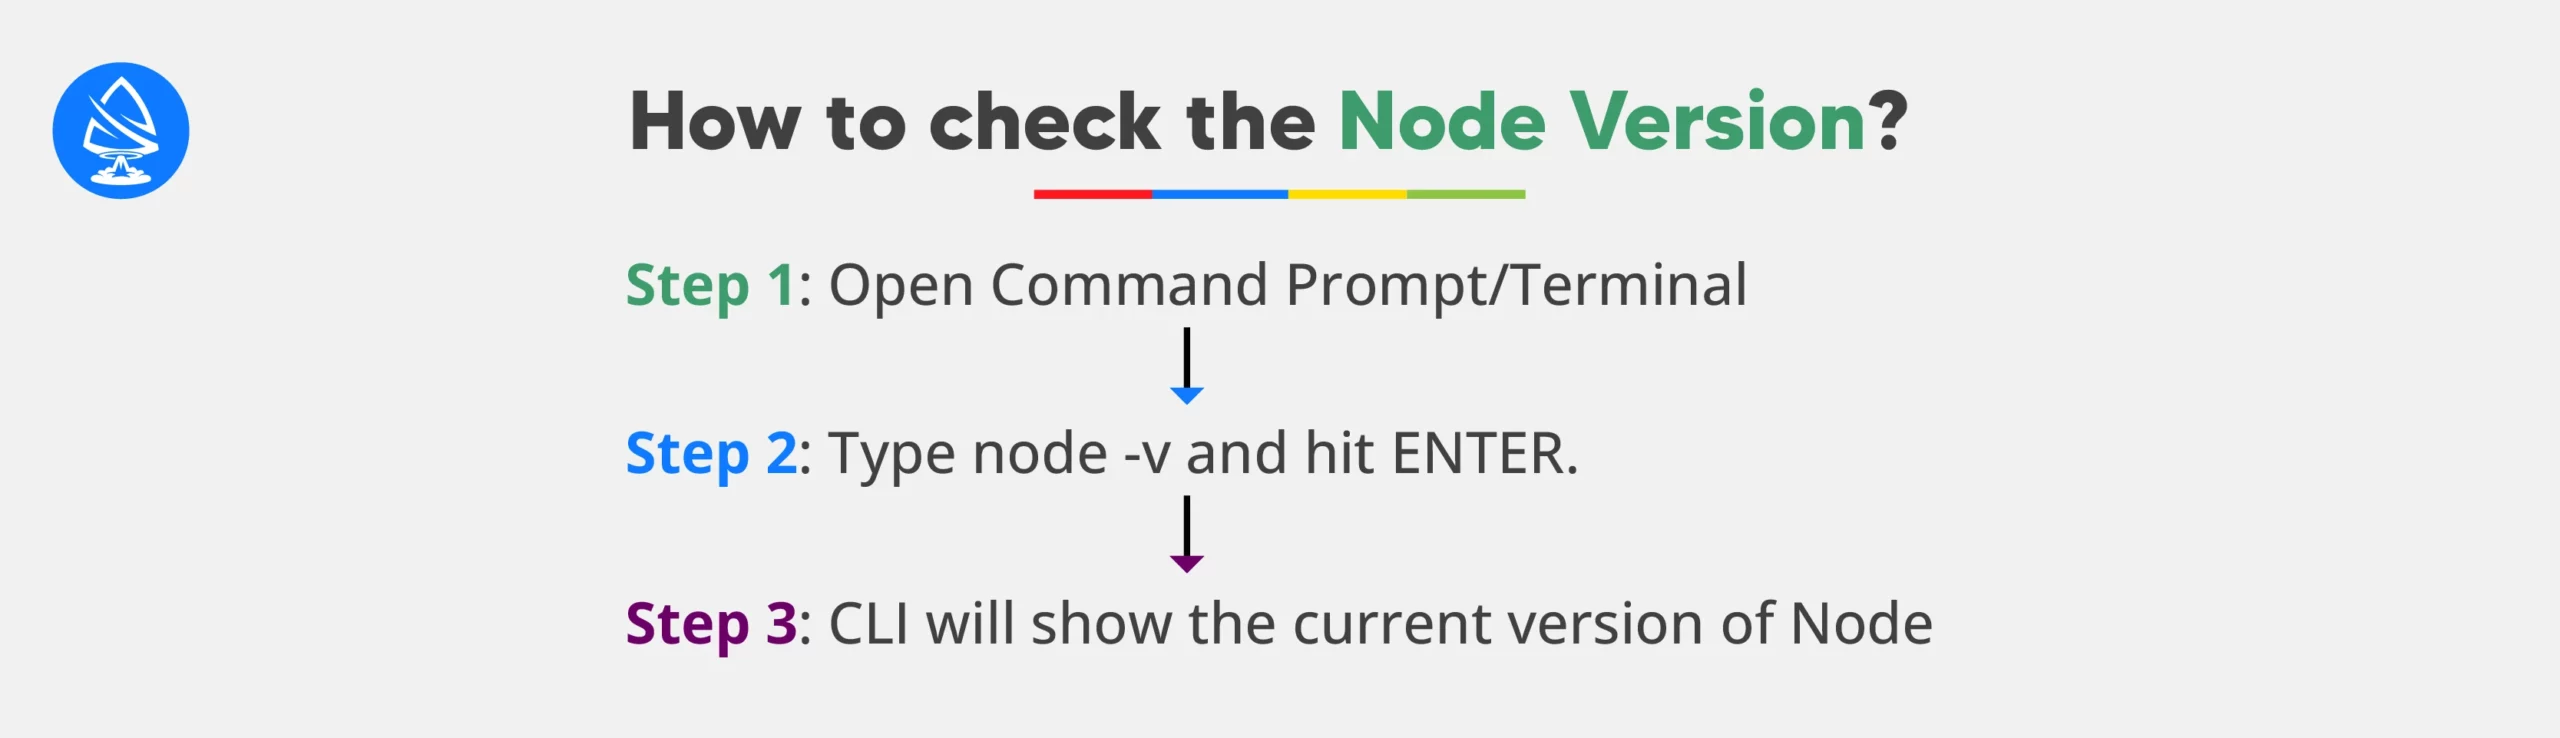 How to Check Node Version Through Command Line? 